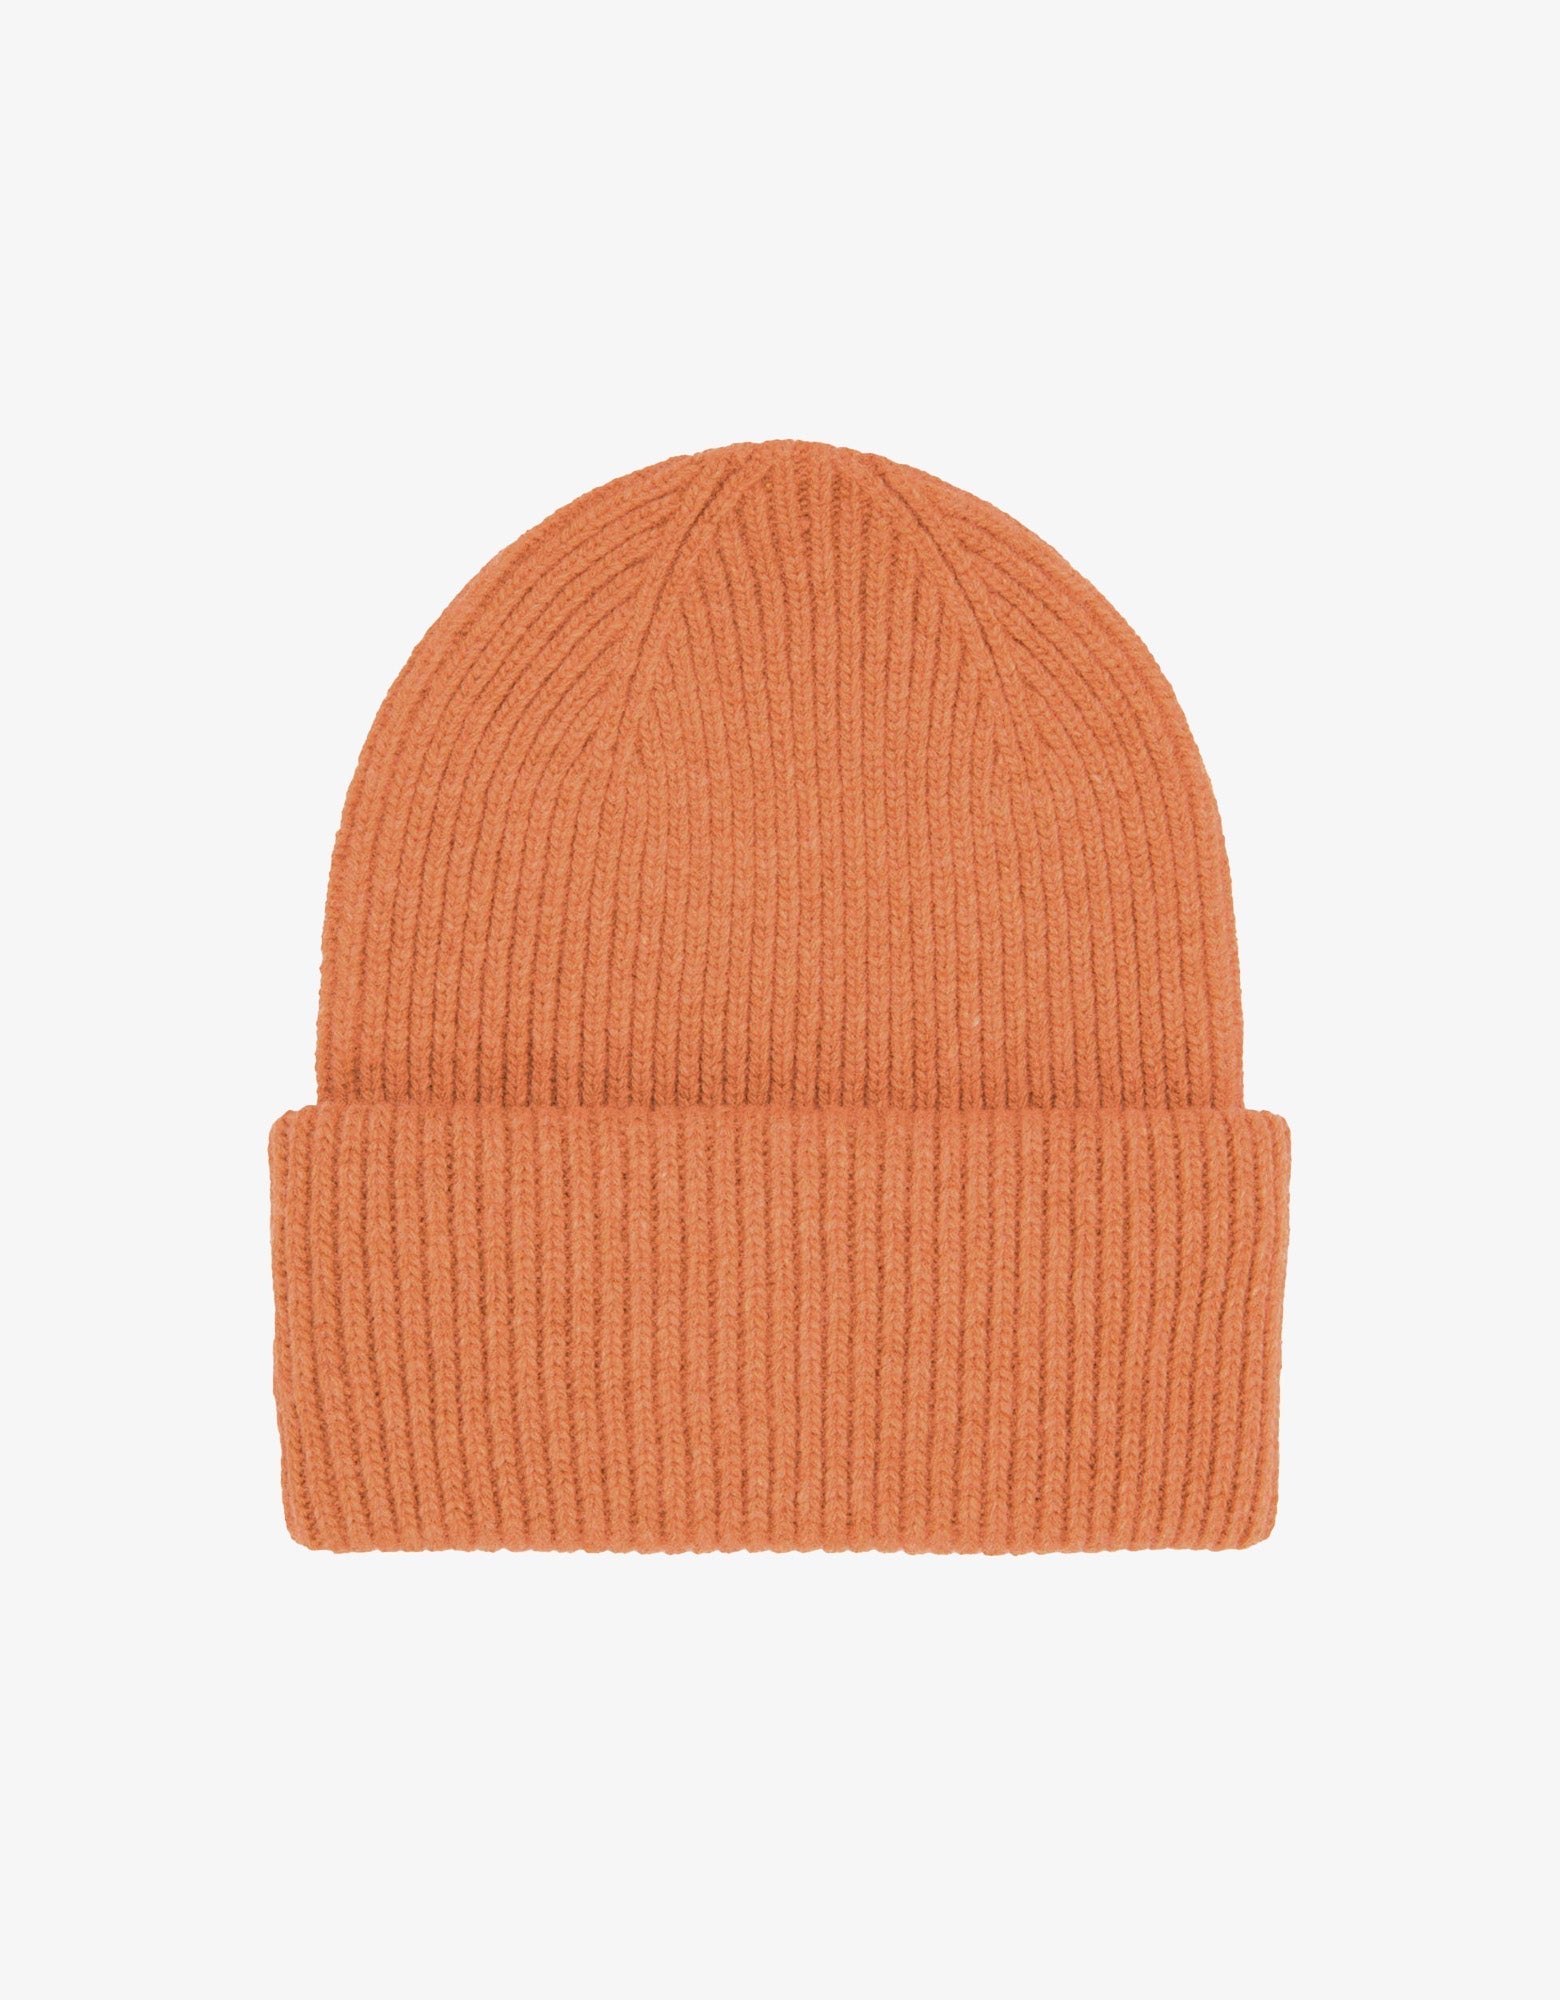 Merino Wool Hat - Sandstone Orange